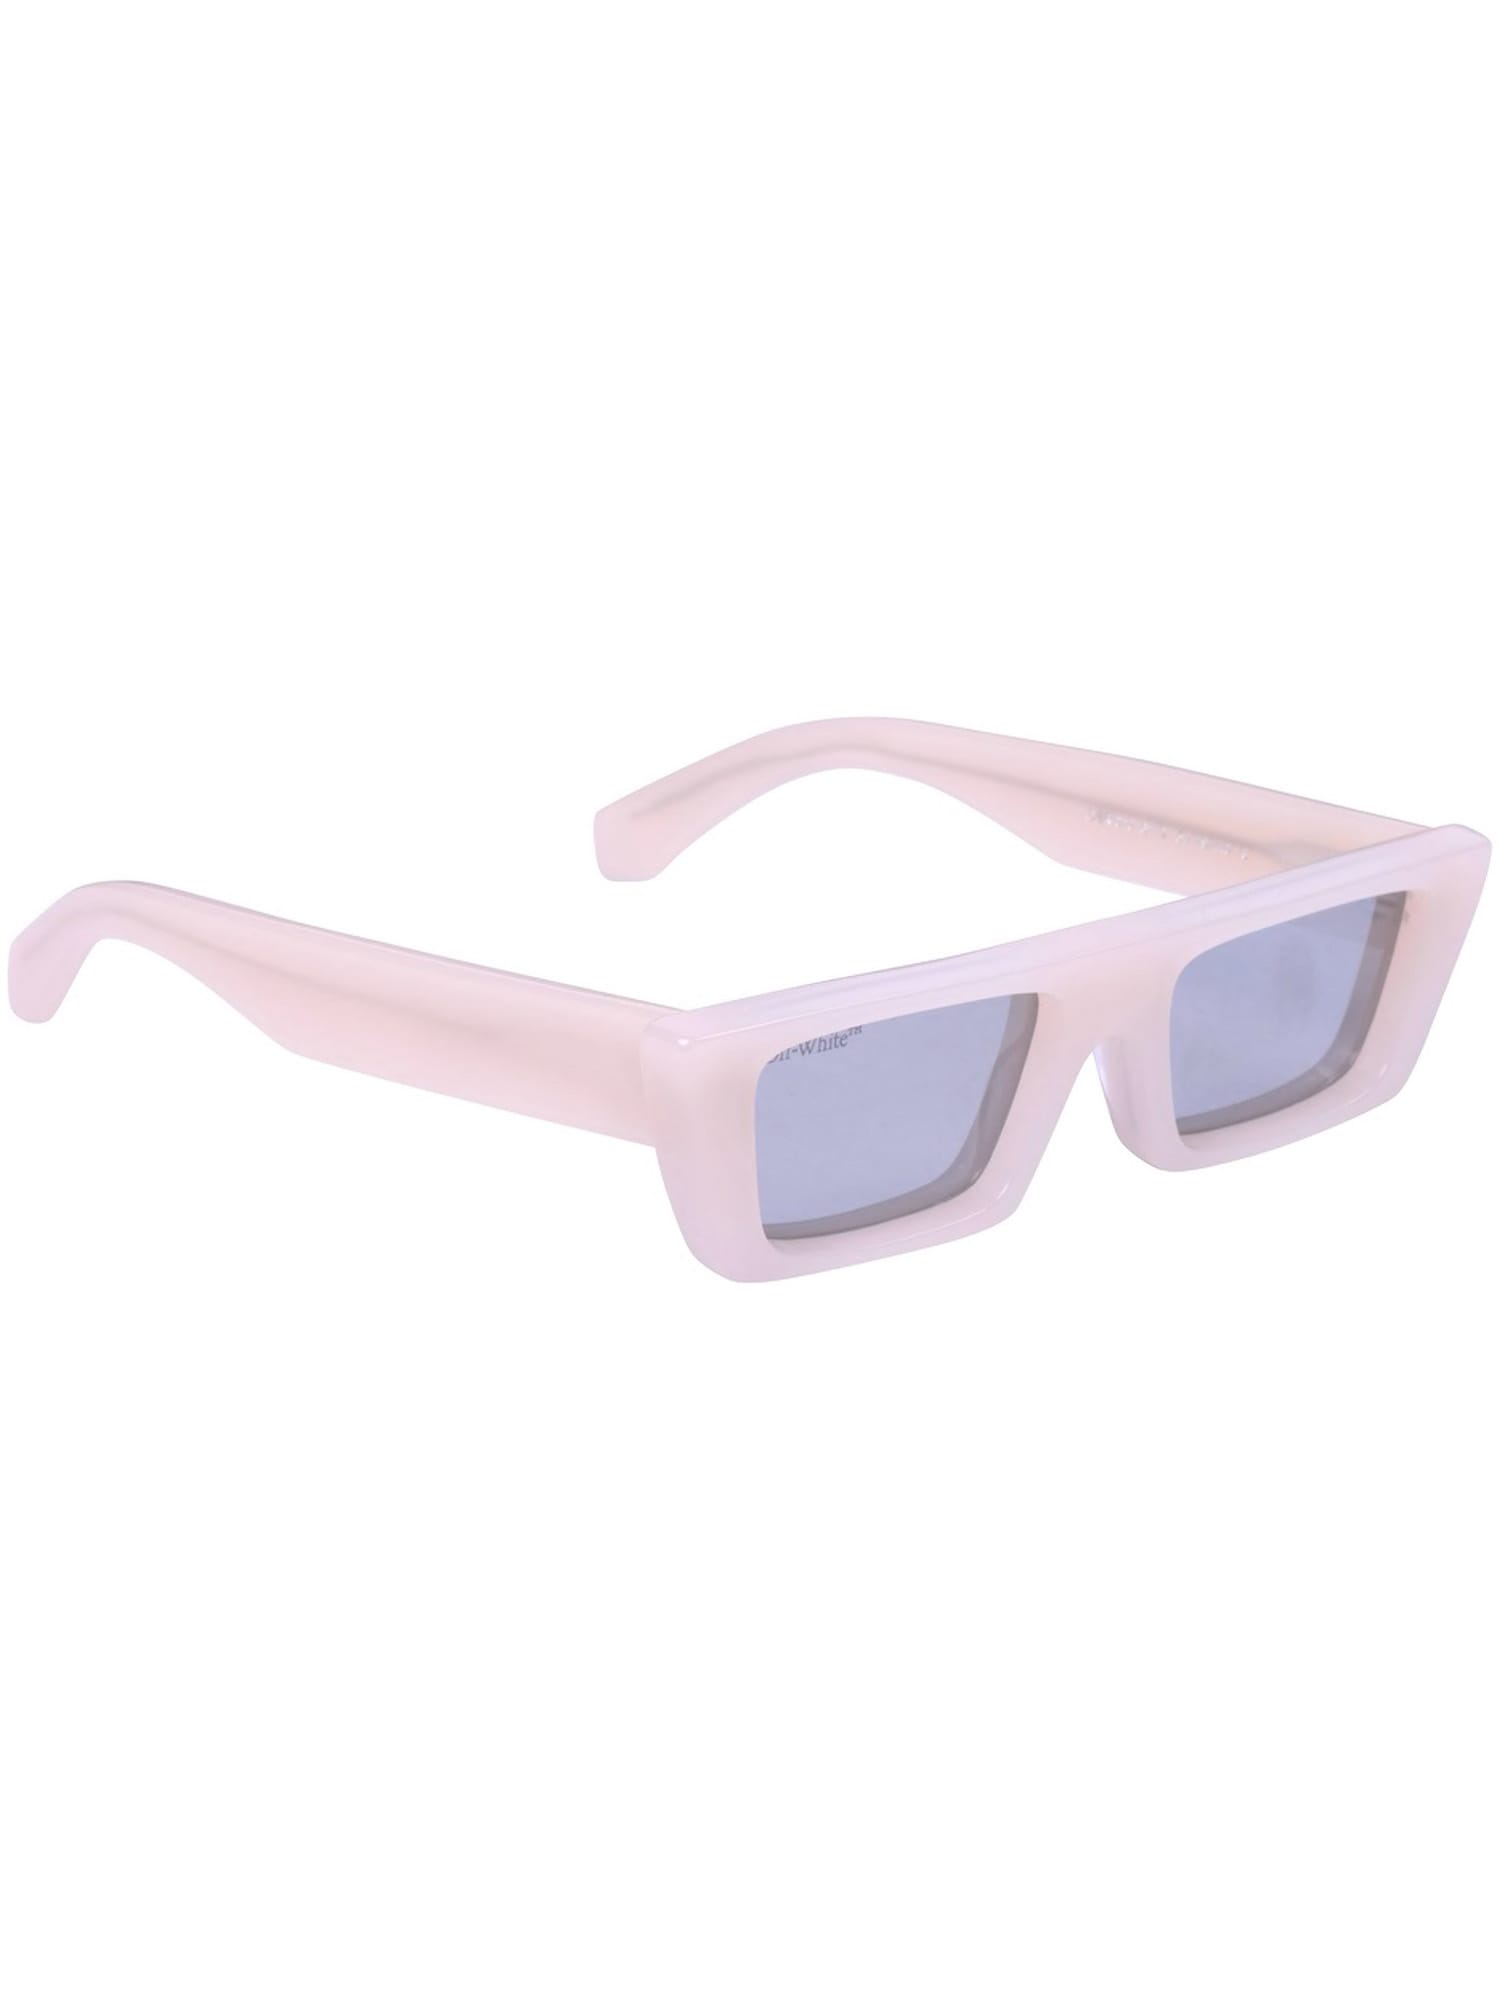 Off-White MARFA SUNGLASSES Sunglasses